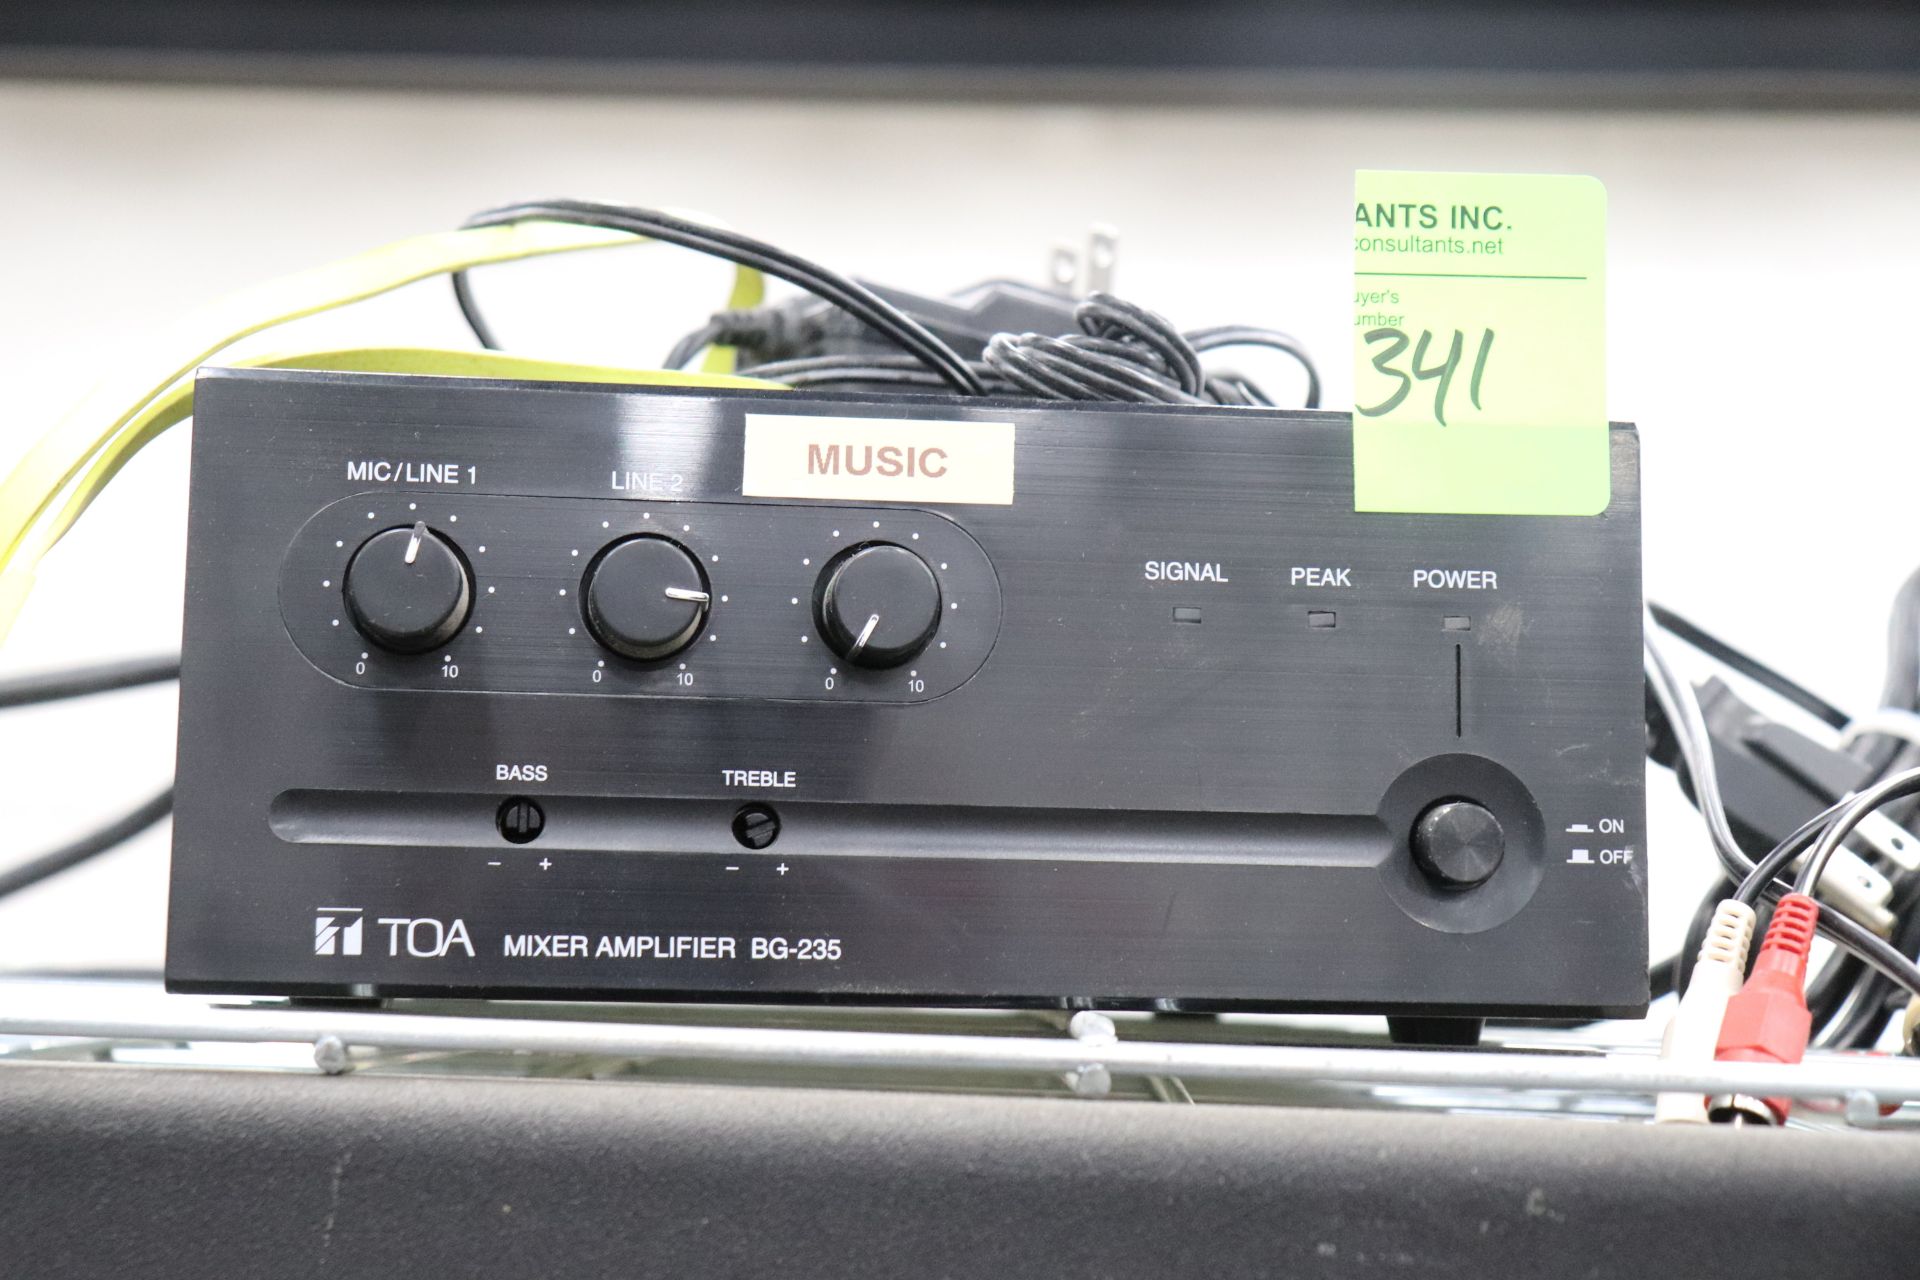 Toa Mixer Amplifier, model BG-235